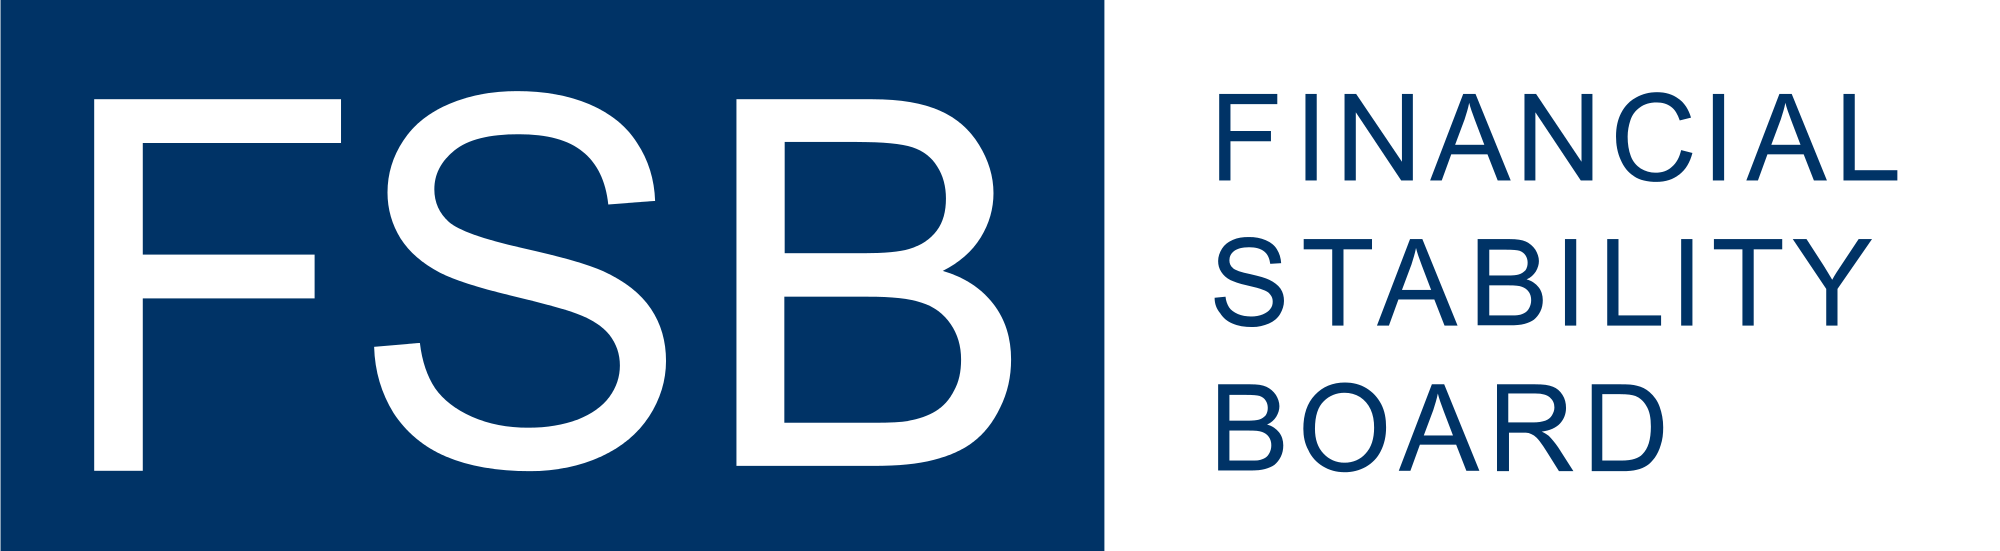 Financial Stability Board - FSB